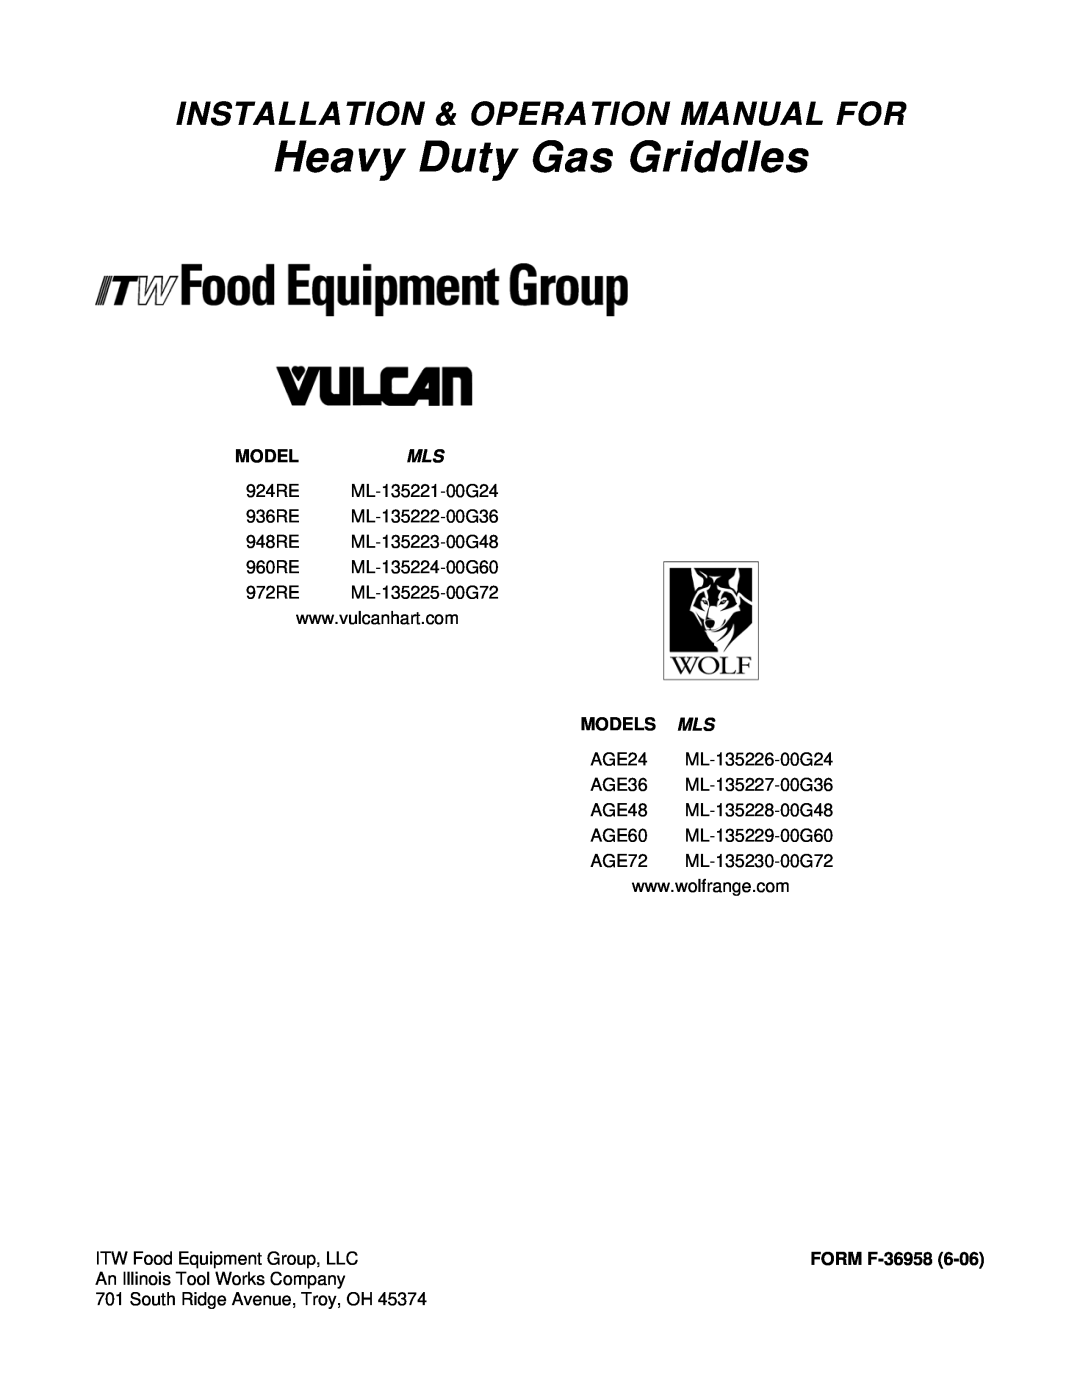 Vulcan-Hart operation manual Heavy Duty Gas Griddles, Modelmls, Models Mls, ITW Food Equipment Group, LLC, FORM F-36958 